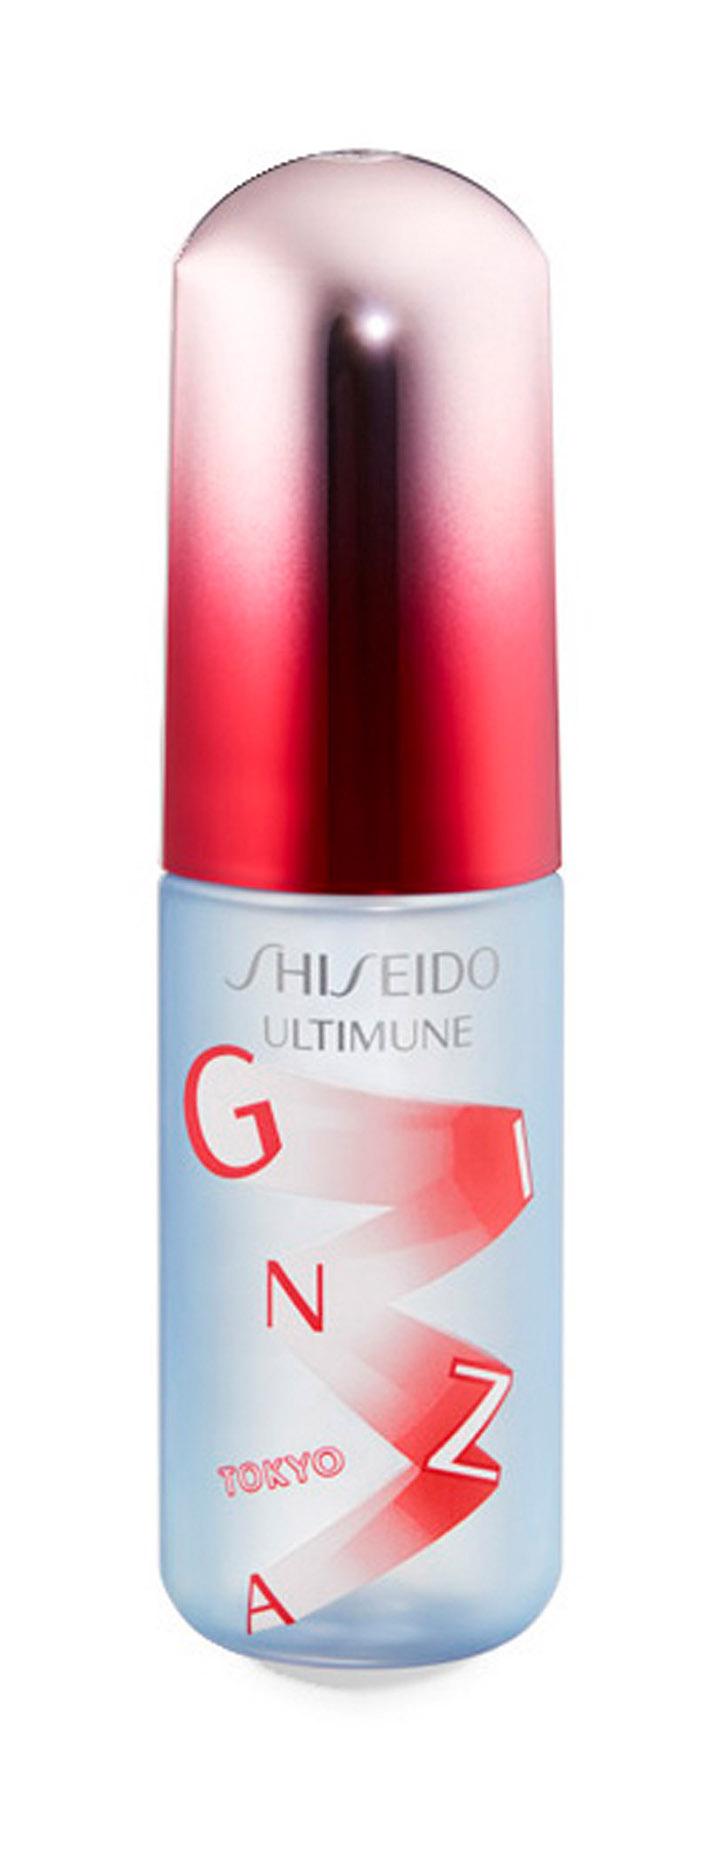 Освежающий мист для лица Shiseido Ultimune Defense Refresh Mist Duo защитный, 60 мл увлажняющий мист для лица botavikos anti pollution hydrating mist 100 мл